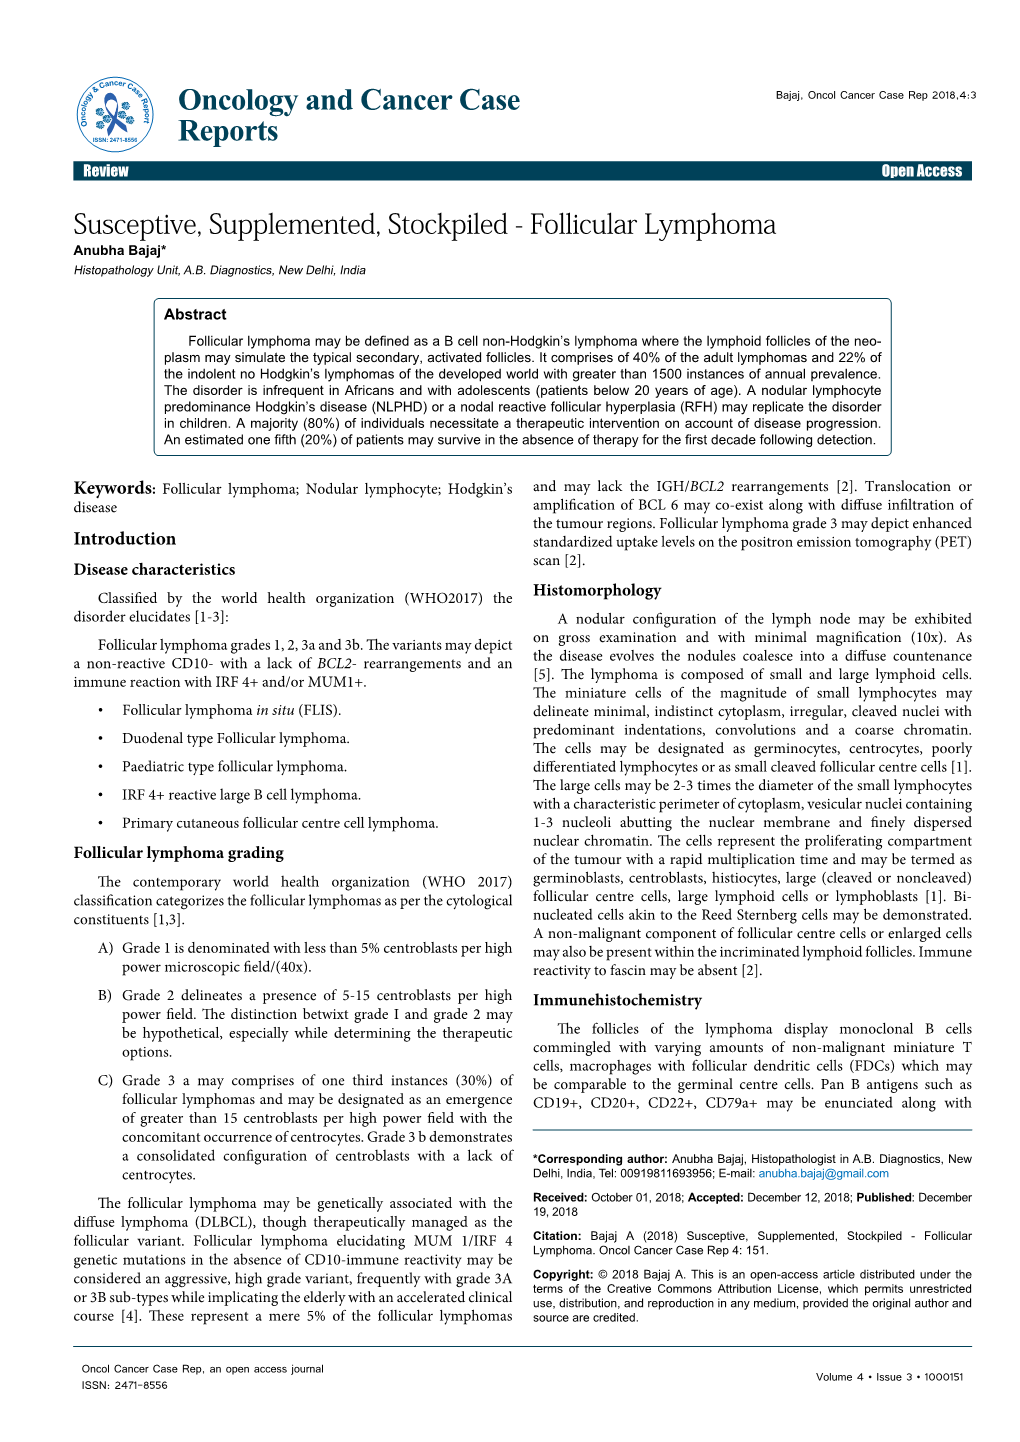 Susceptive, Supplemented, Stockpiled - Follicular Lymphoma Anubha Bajaj* Histopathology Unit, A.B